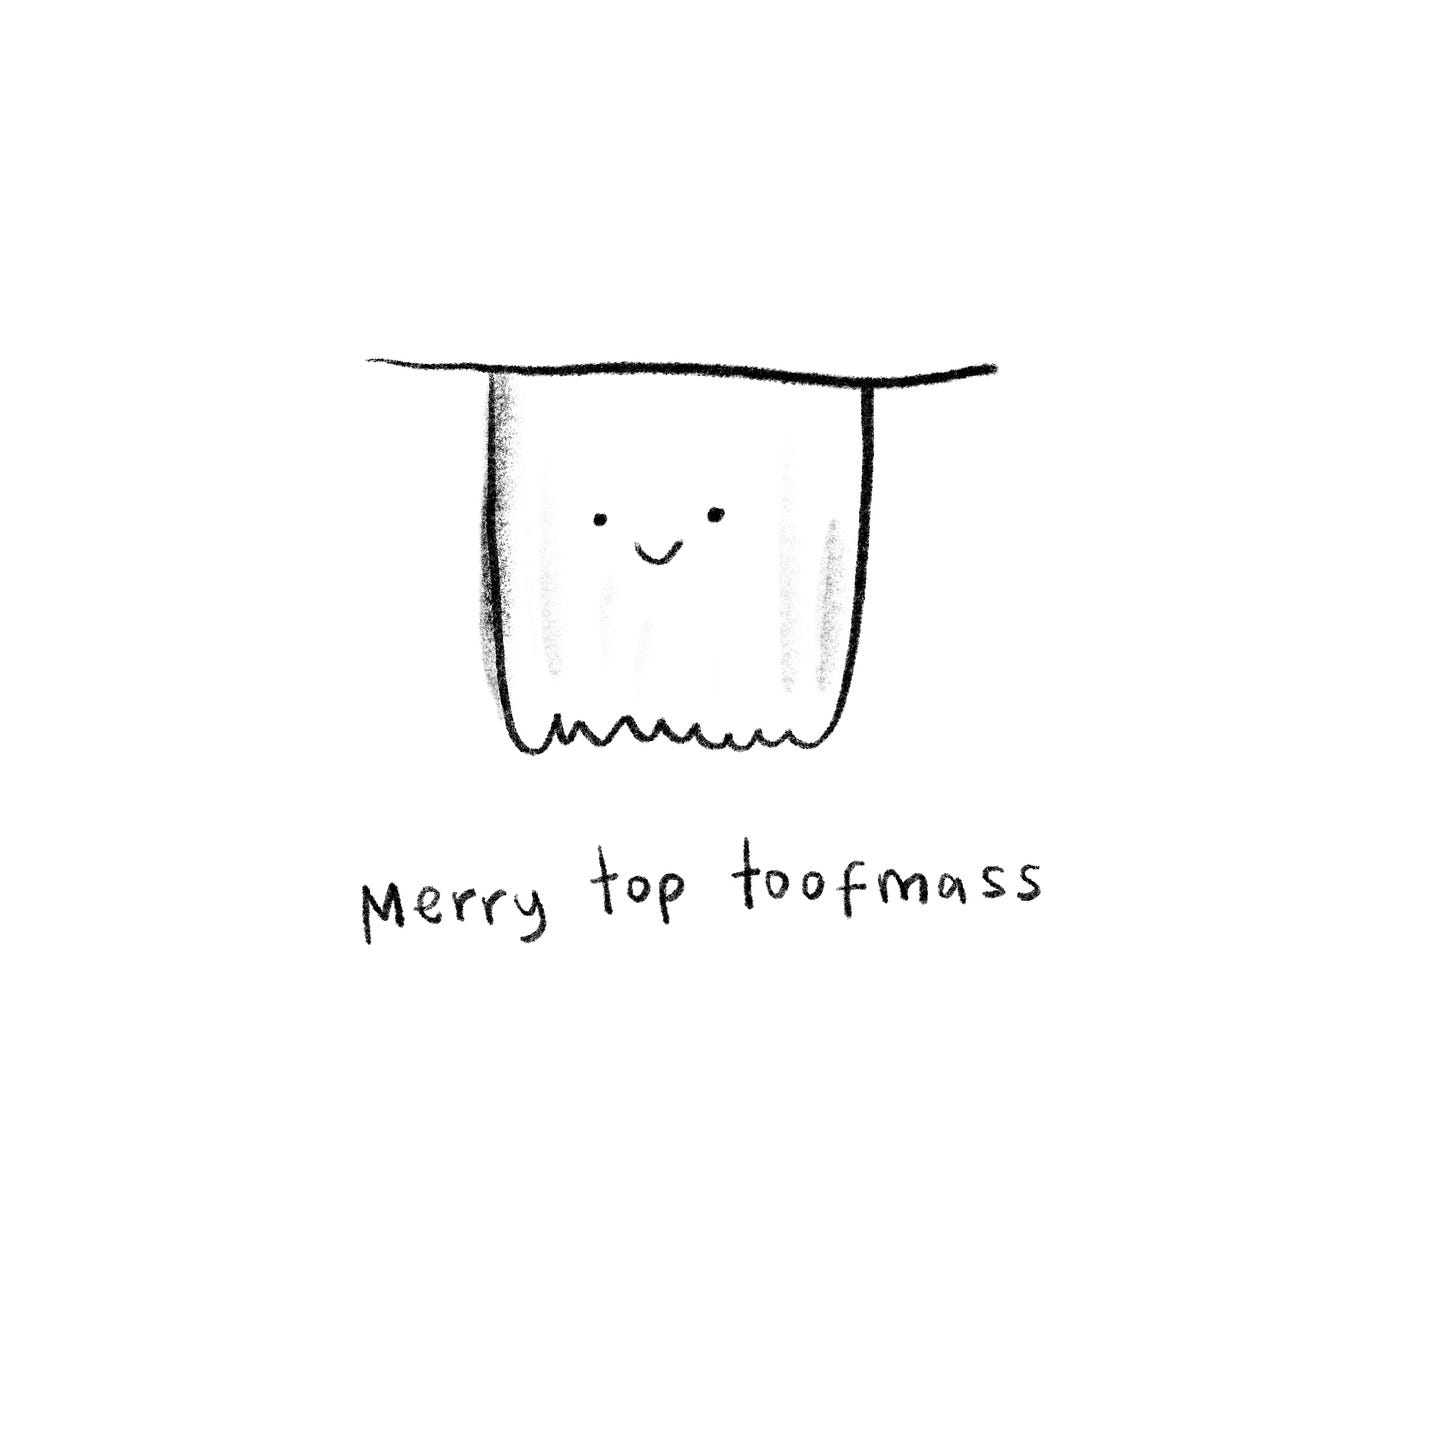 merry top toofmass